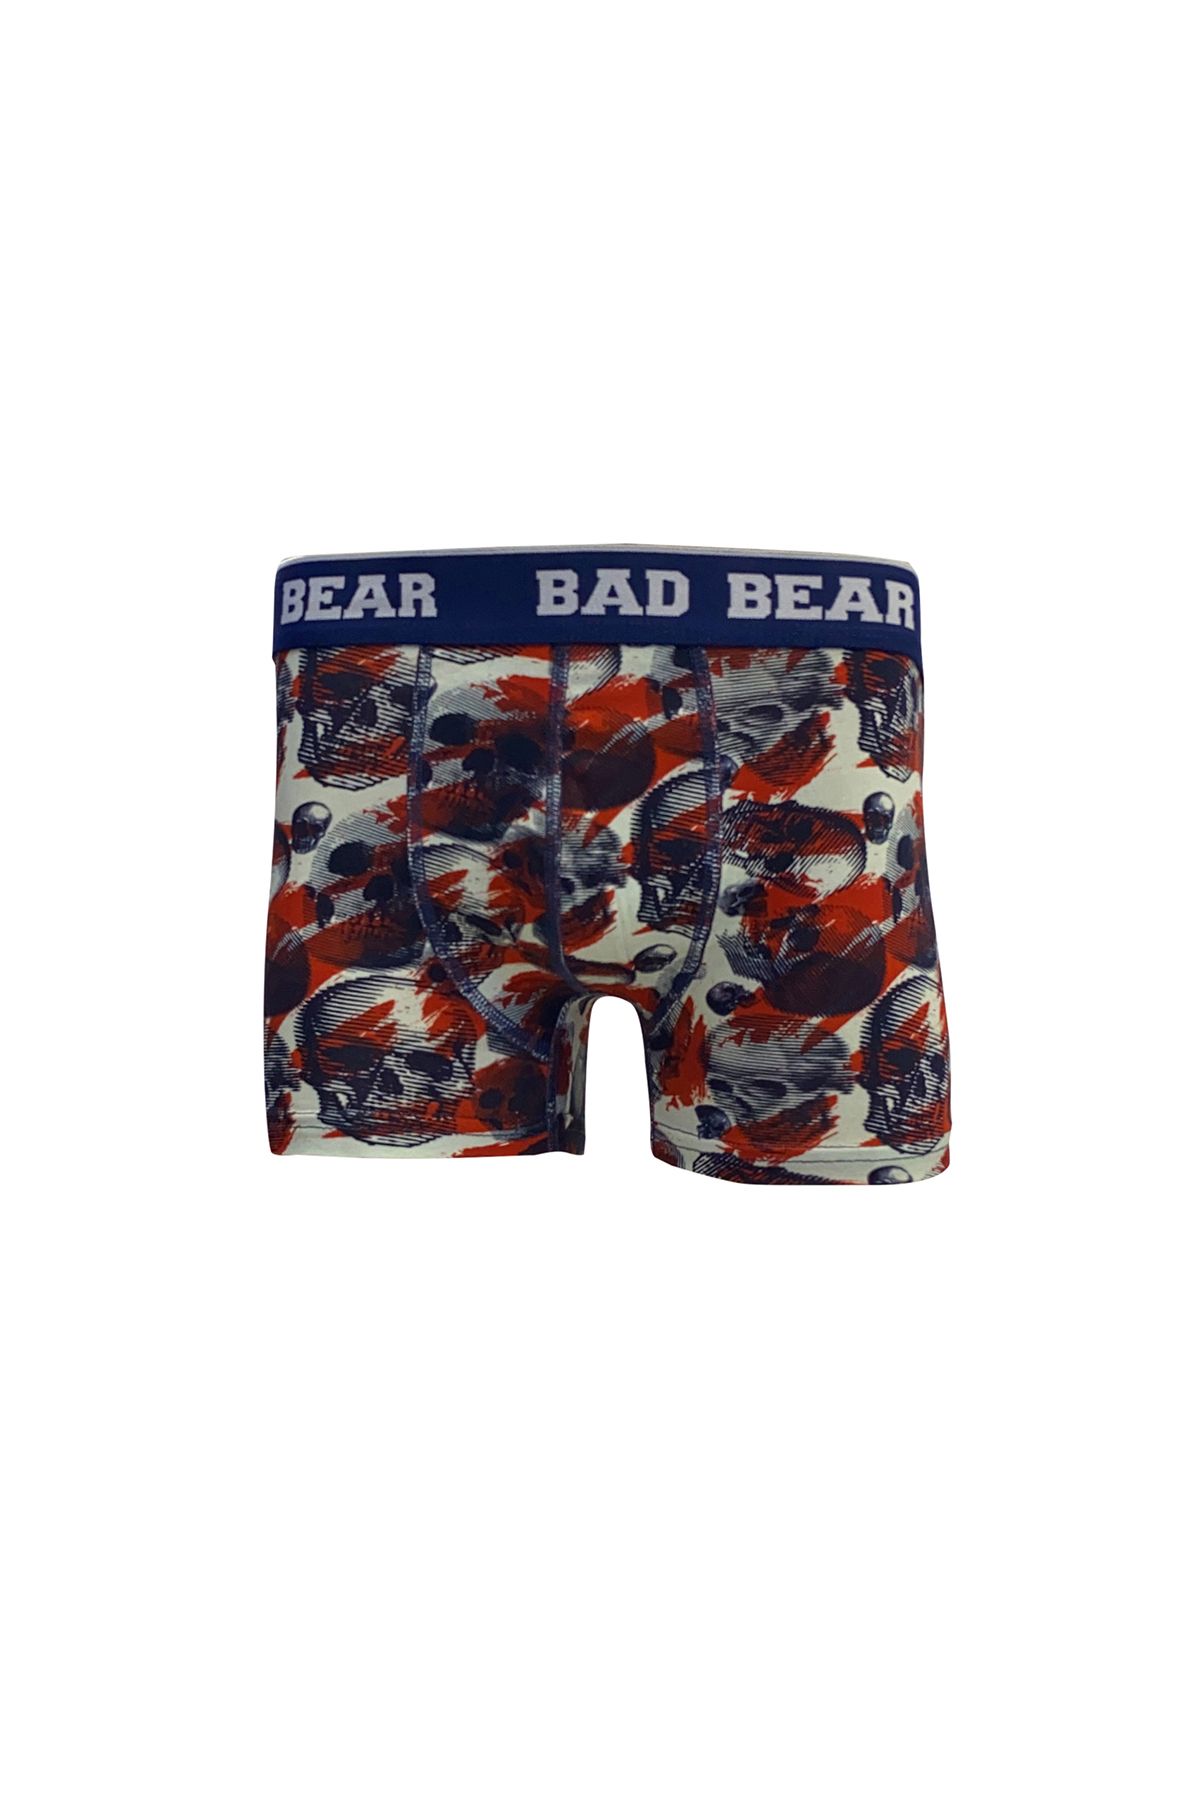 Bad Bear 21.01.03.010-c04 Redrum Erkek Boxer